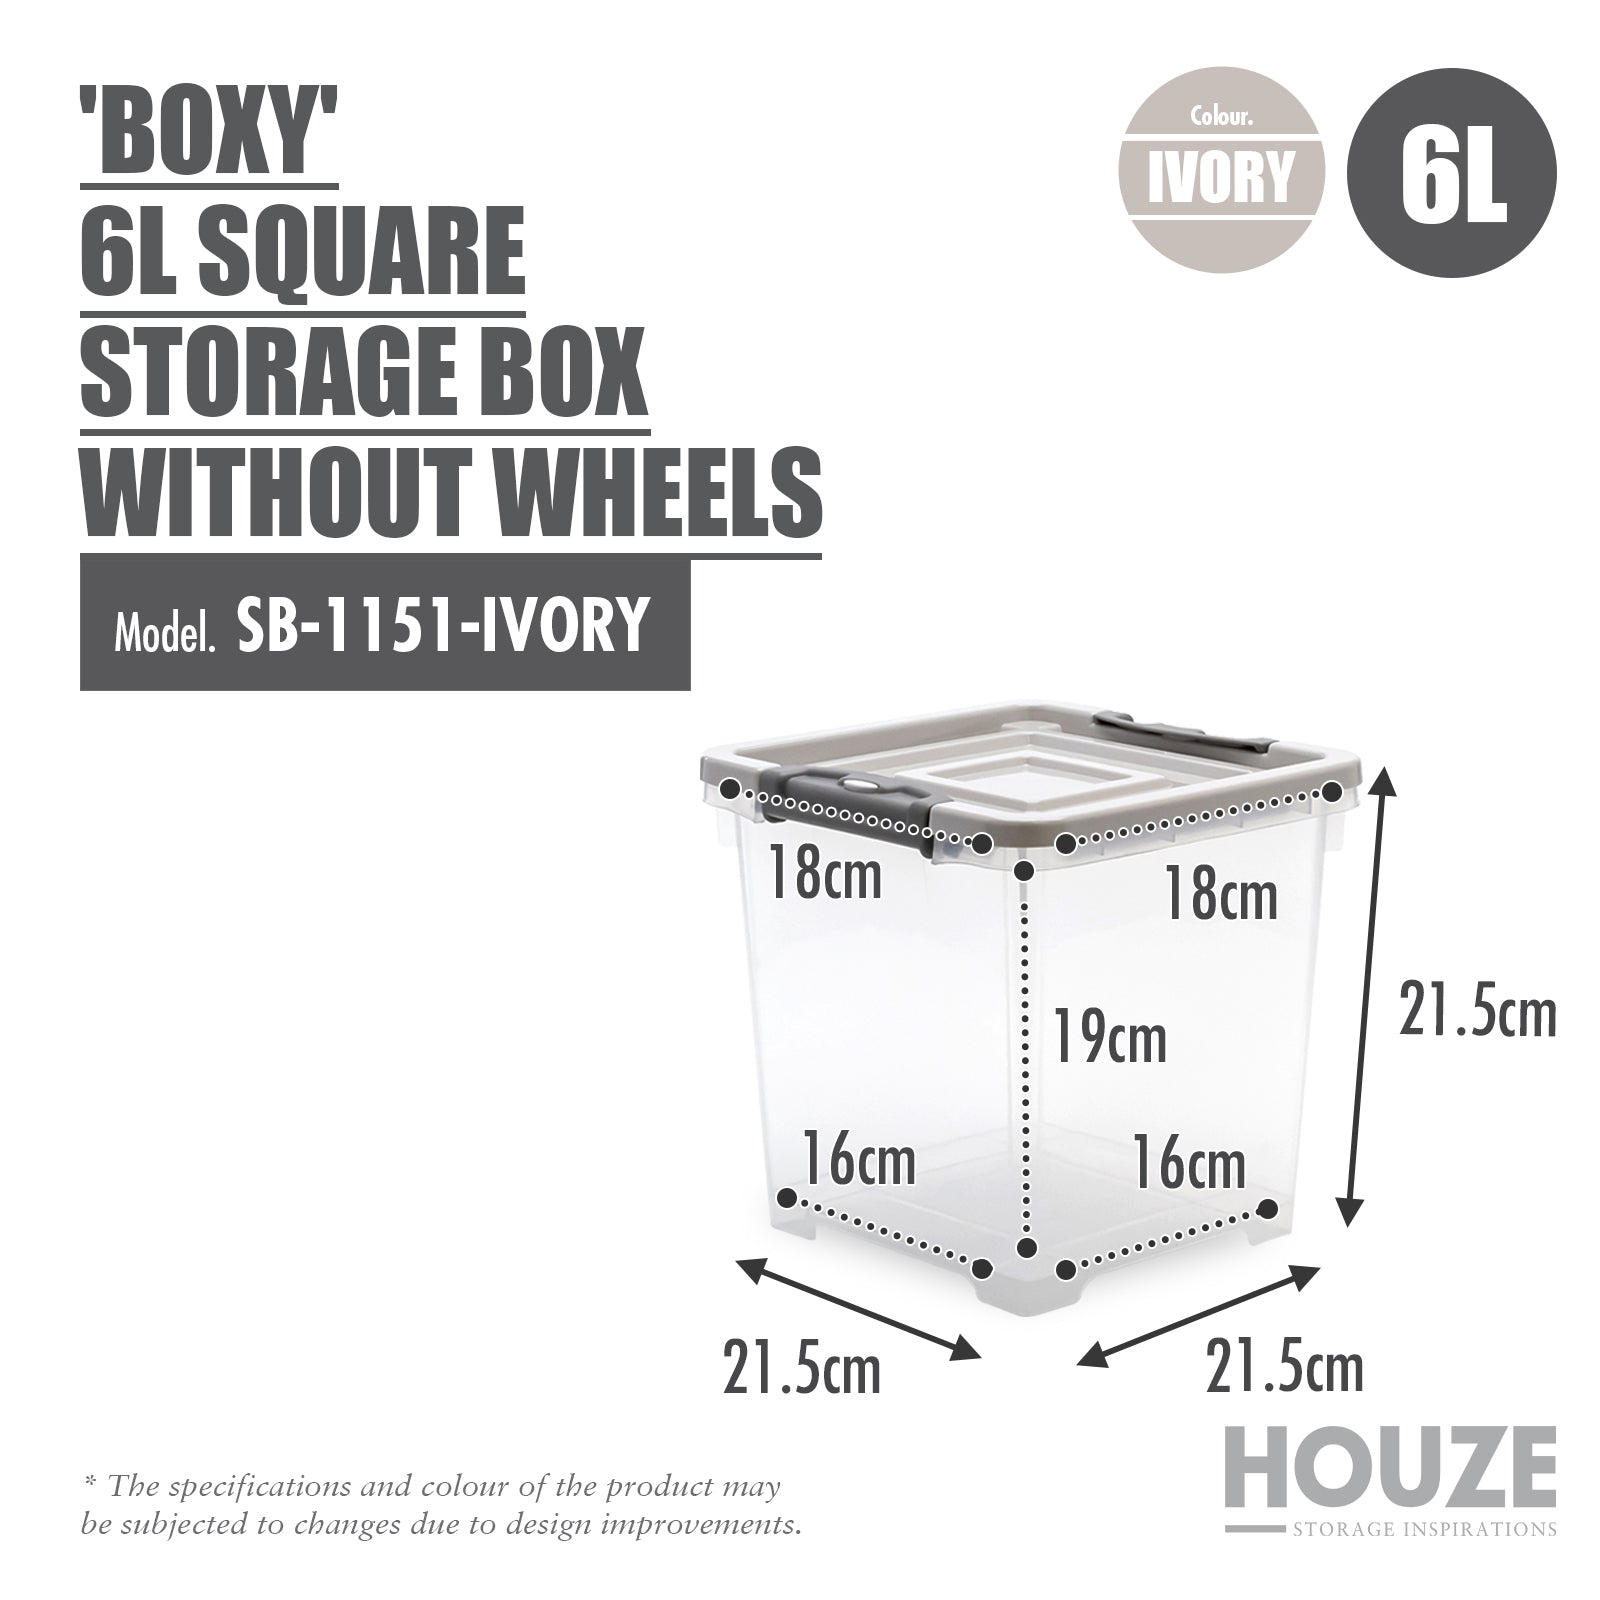 HOUZE 'BOXY' Series Square Storage Boxes: Your Key to Organized Spaces!